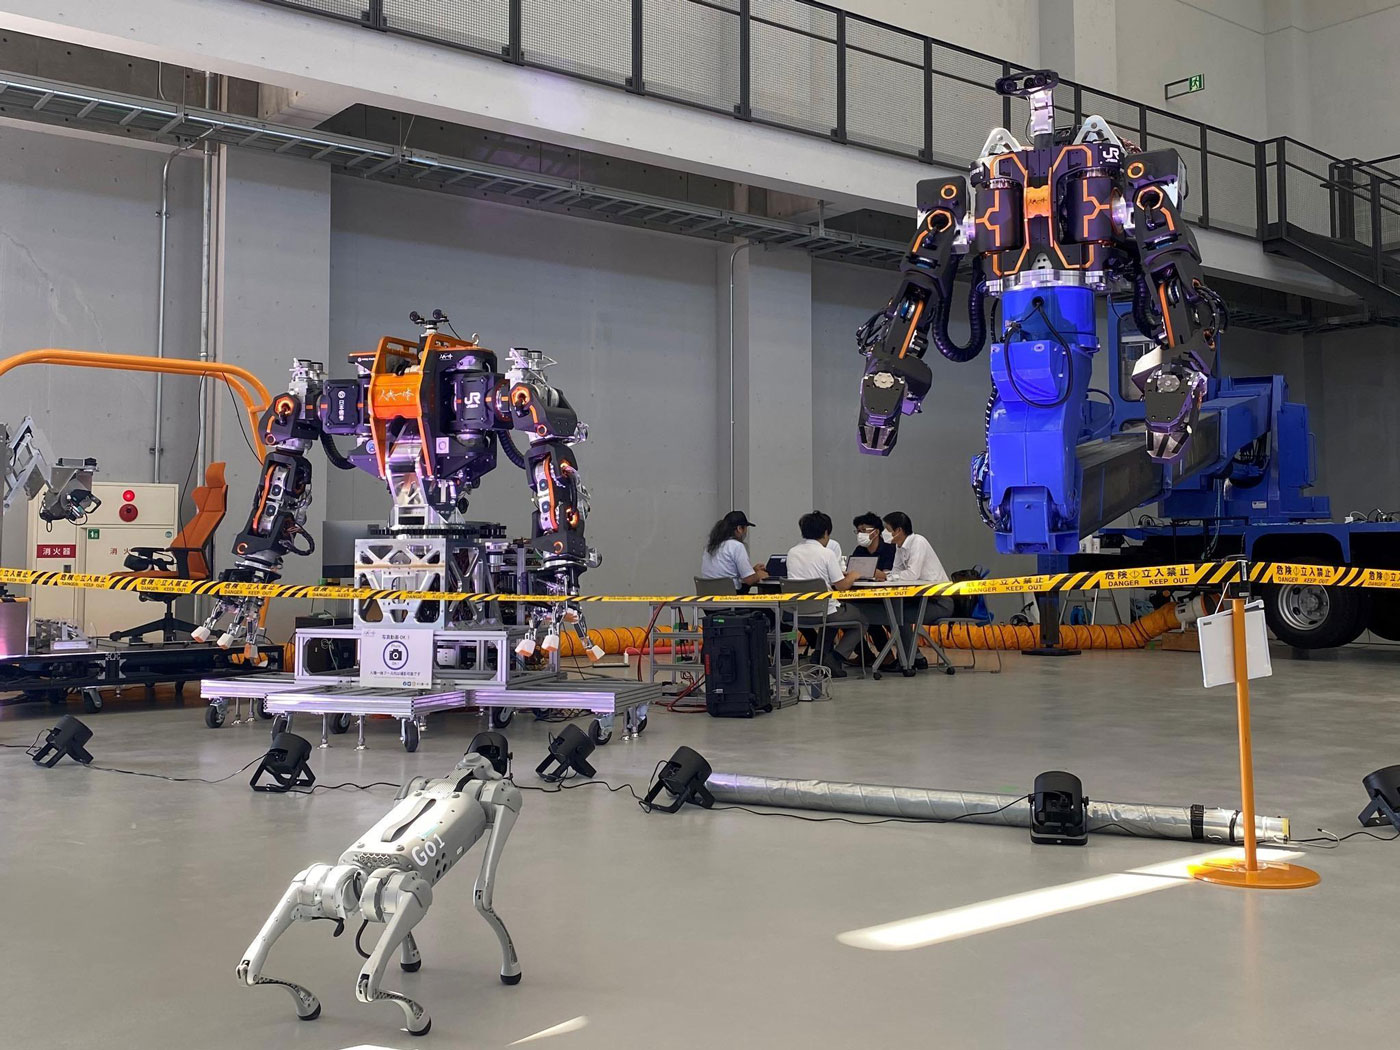 he Robotes Expo 2022 at the Fukushima Robot Test Field